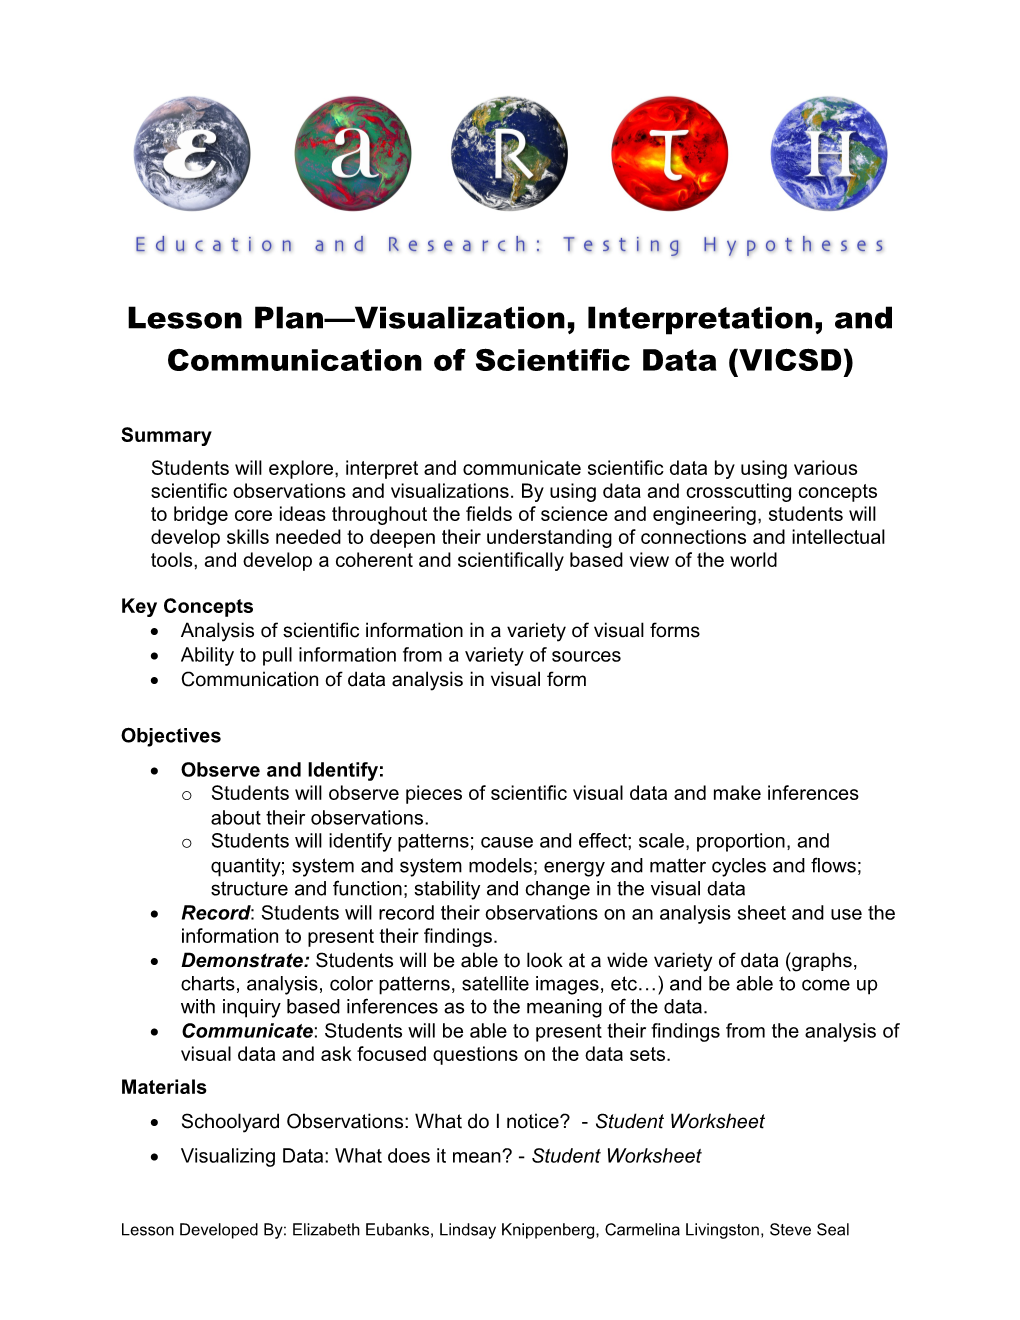 Lesson Plan Visualization, Interpretation, and Communication of Scientific Data (VICSD)